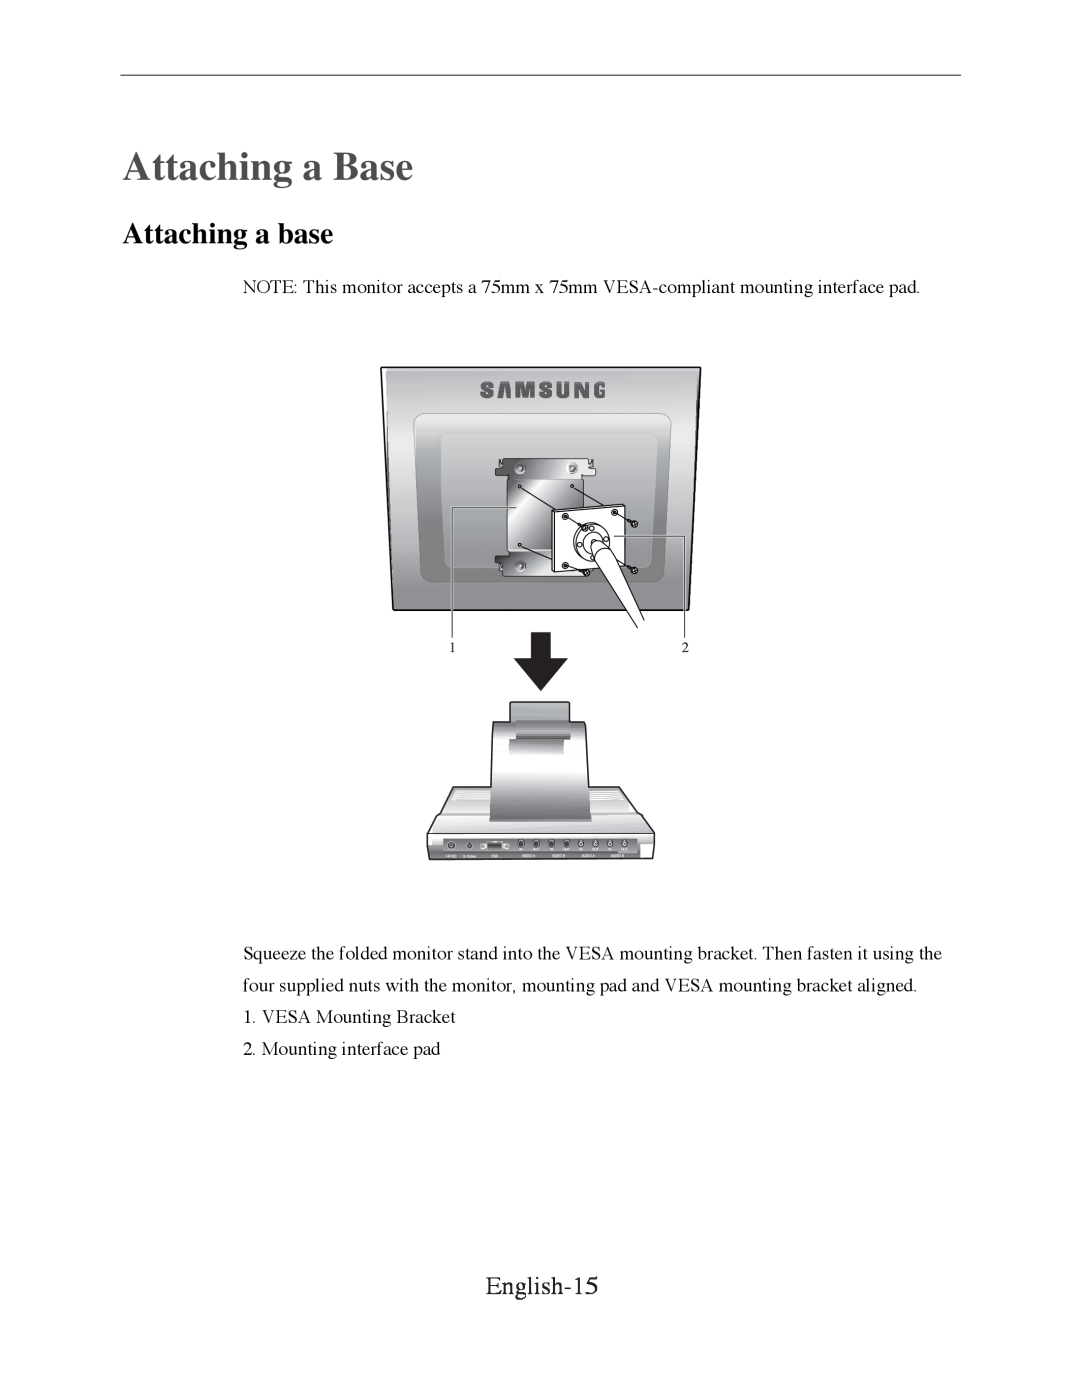 Samsung SMT-170P manual Attaching a Base, Attaching a base, English-15 